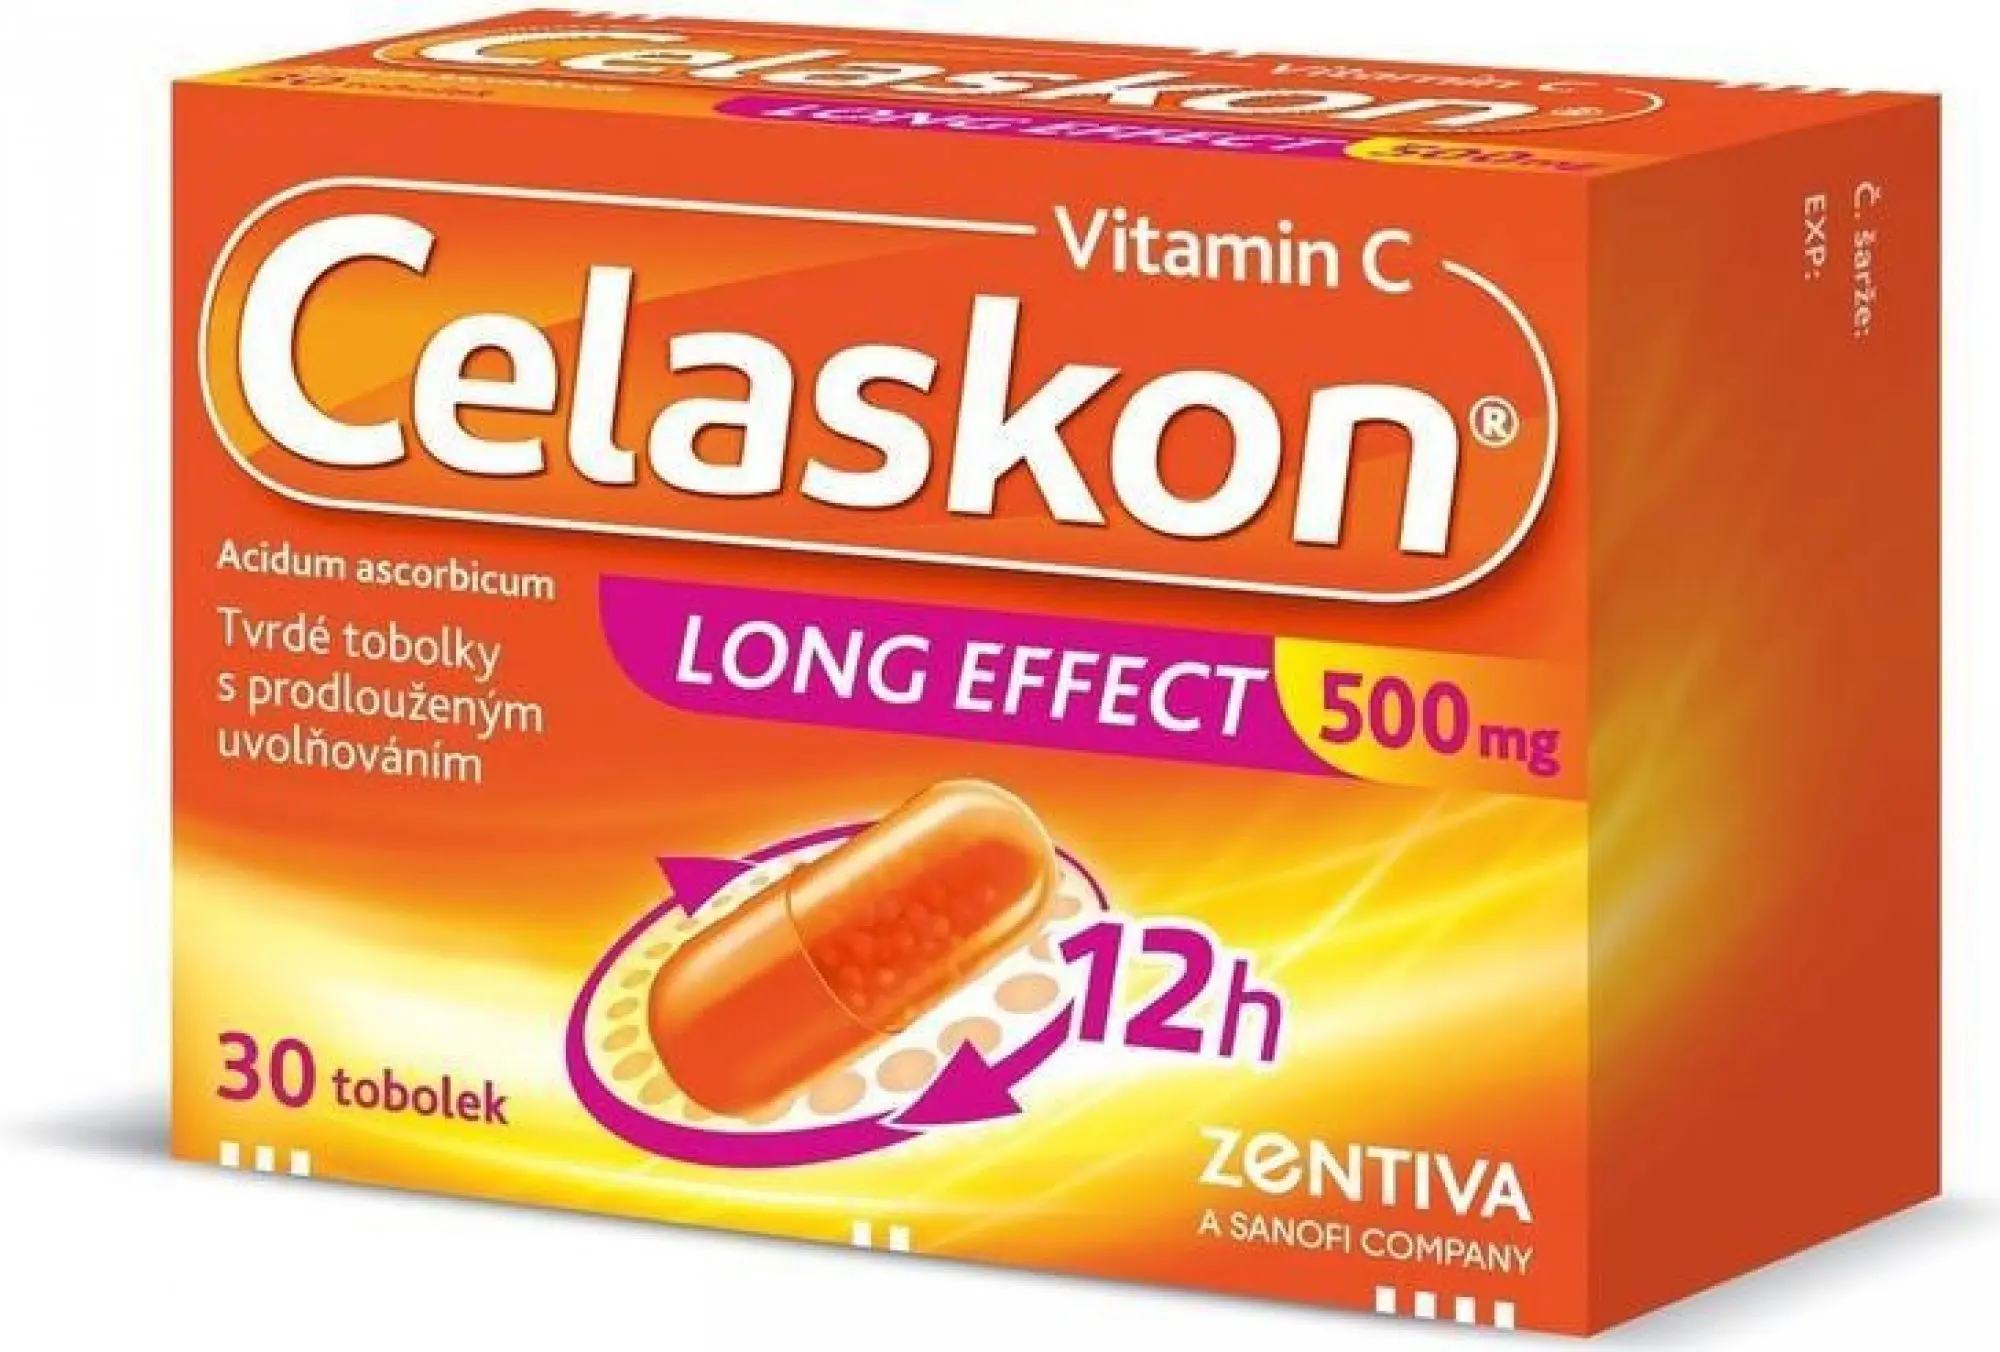 Celaskon Long Effect Vitamin C por.cps.pro. 30 x 500 mg